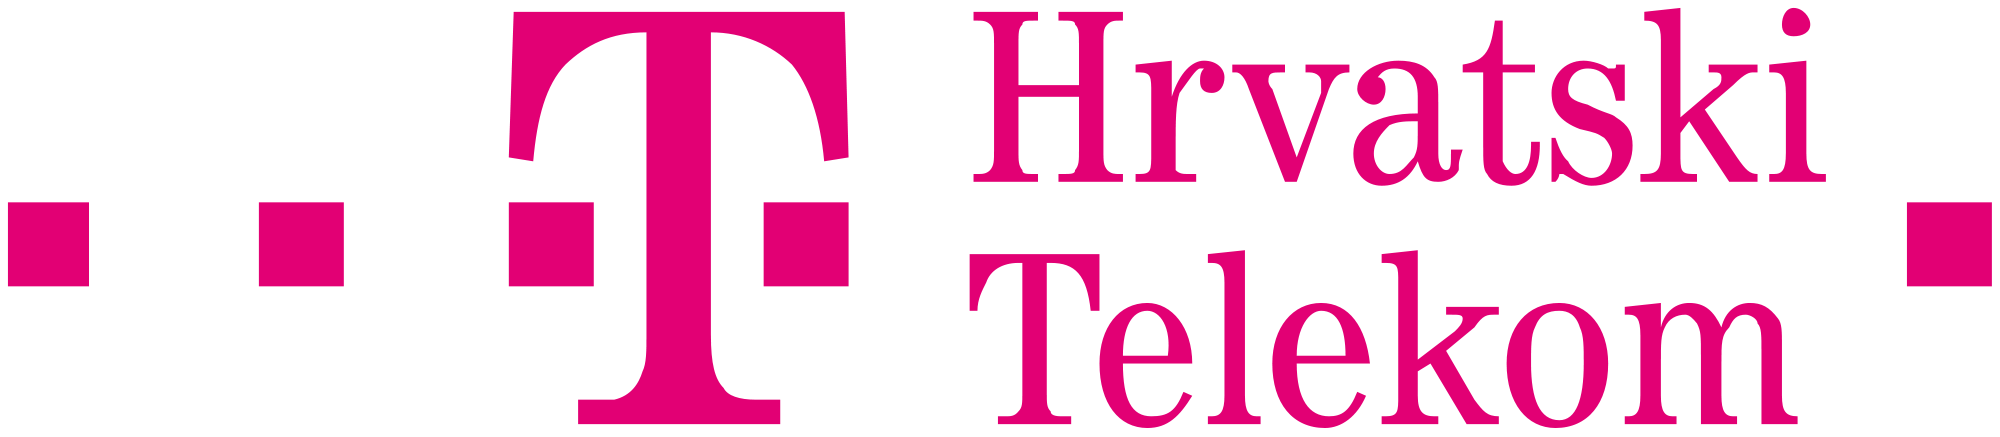 Hrvastke Brand Logo